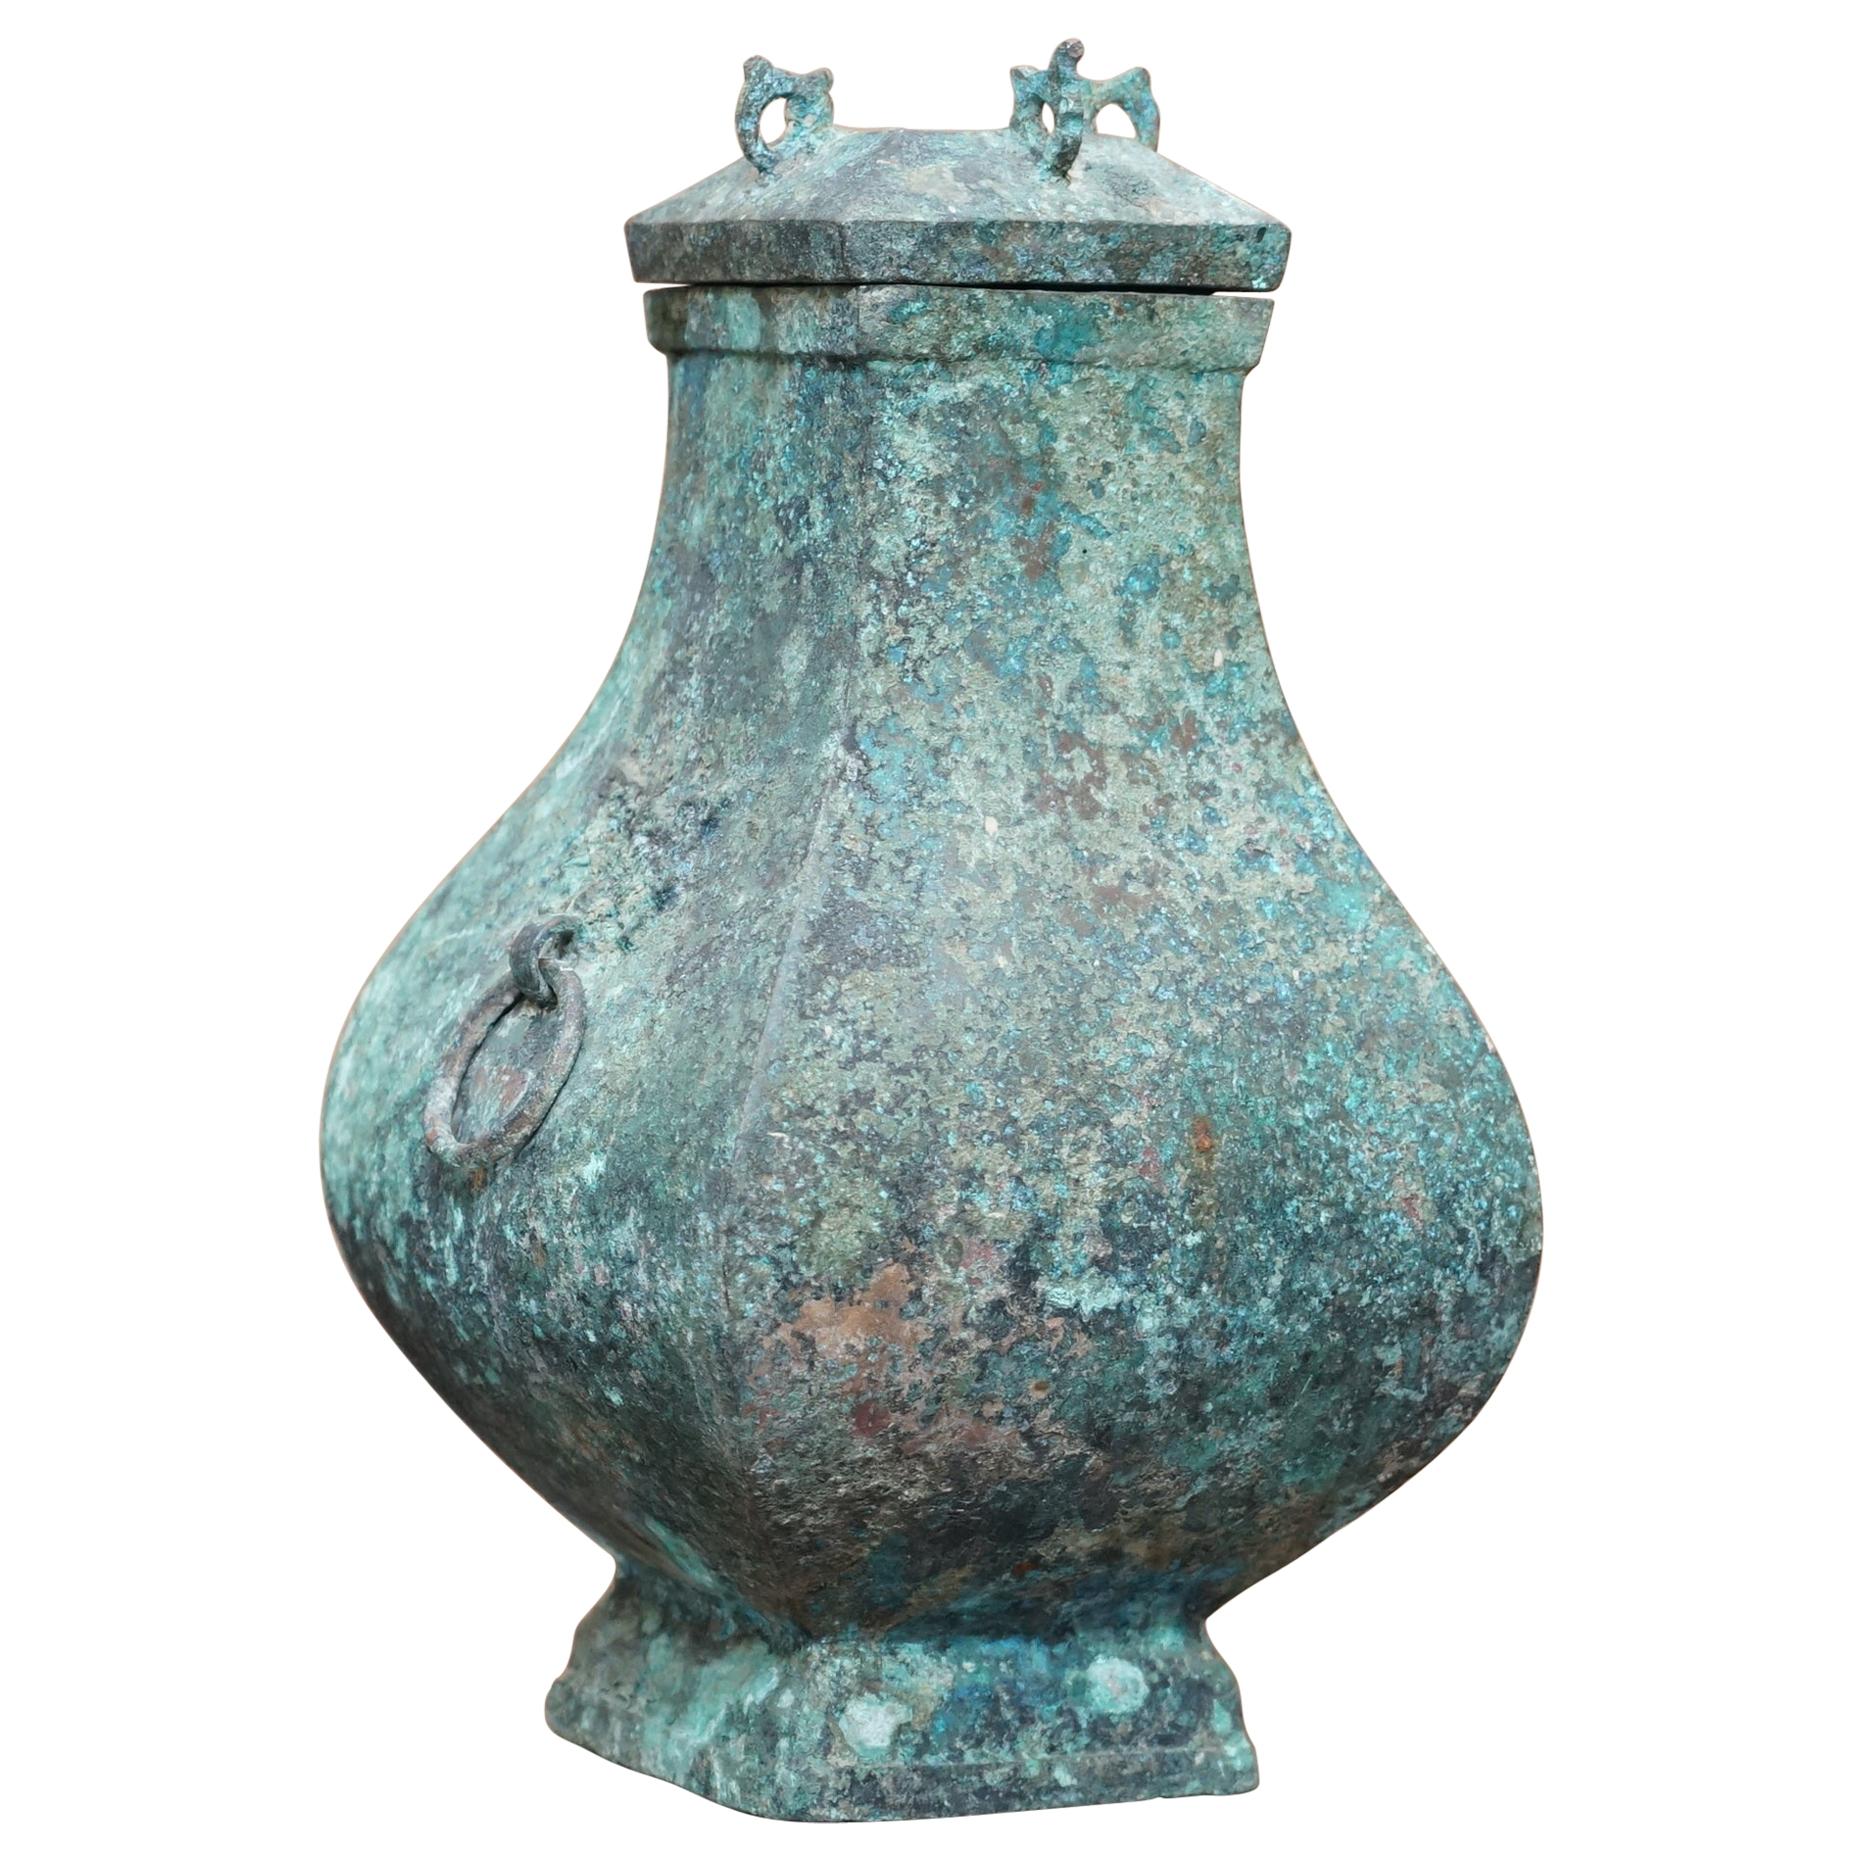 Fanghu Han Dynasty 206BC-220AD Chinese Bronze Ritual Wine Vessel Jug & Cover